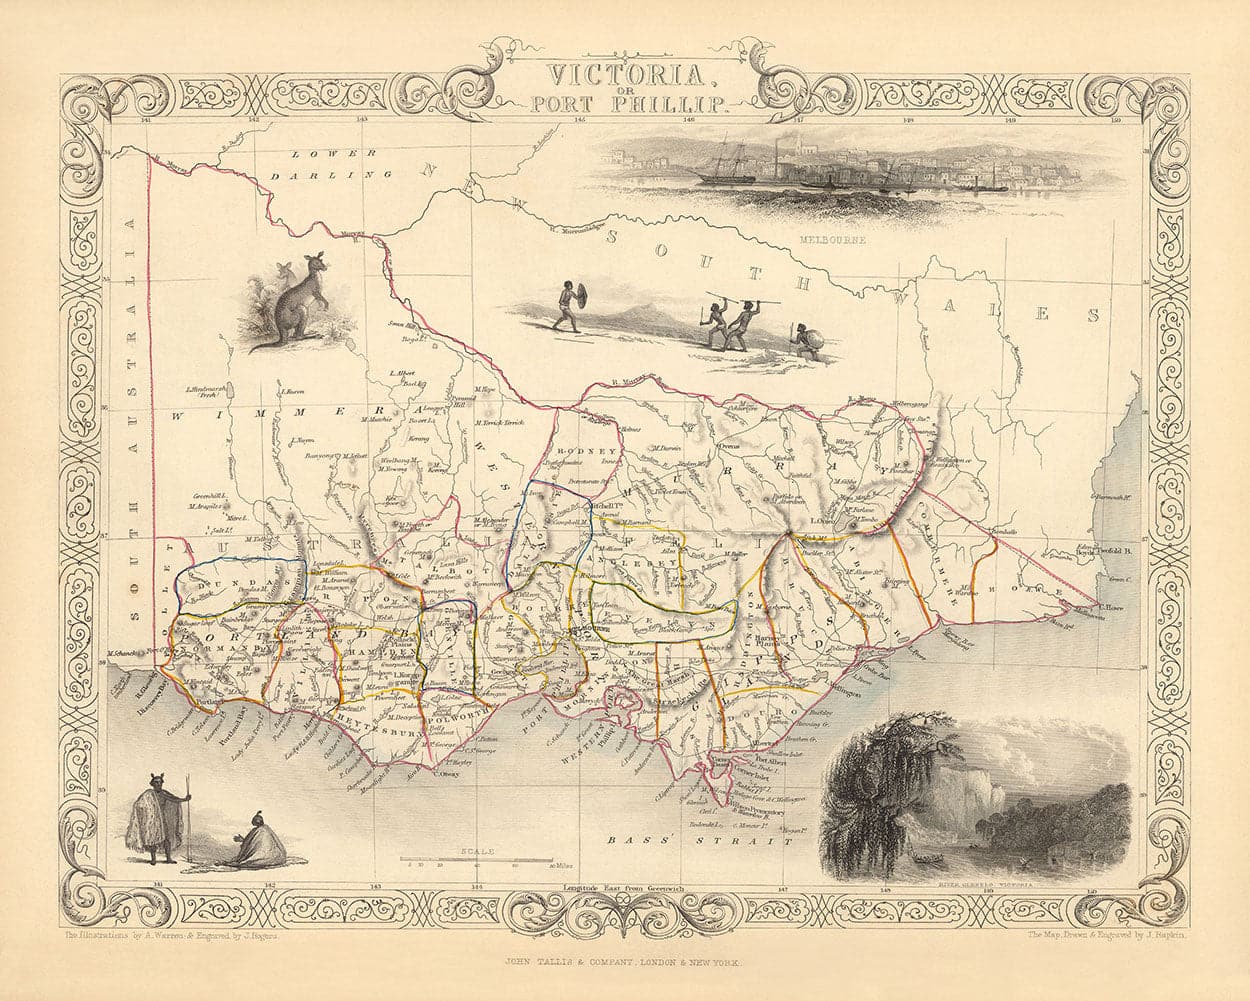 Old Map of Victoria, Australia par Tallis & Rapkin, 1851 - Melbourne, Geelong, Bourke, Grant, Evelyn Counties